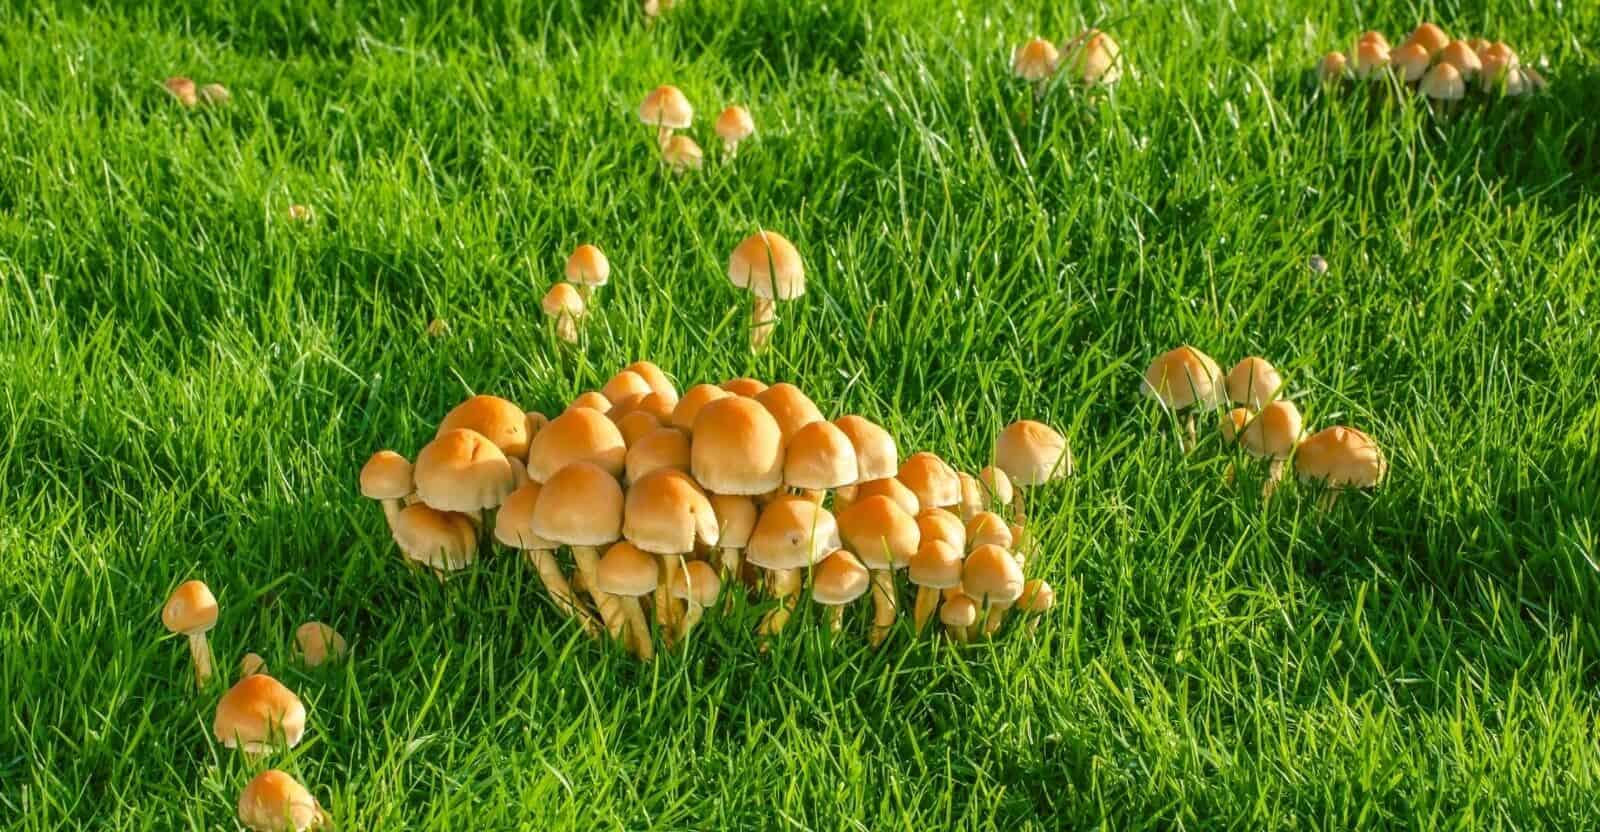 how to get rid of mushrooms in yard